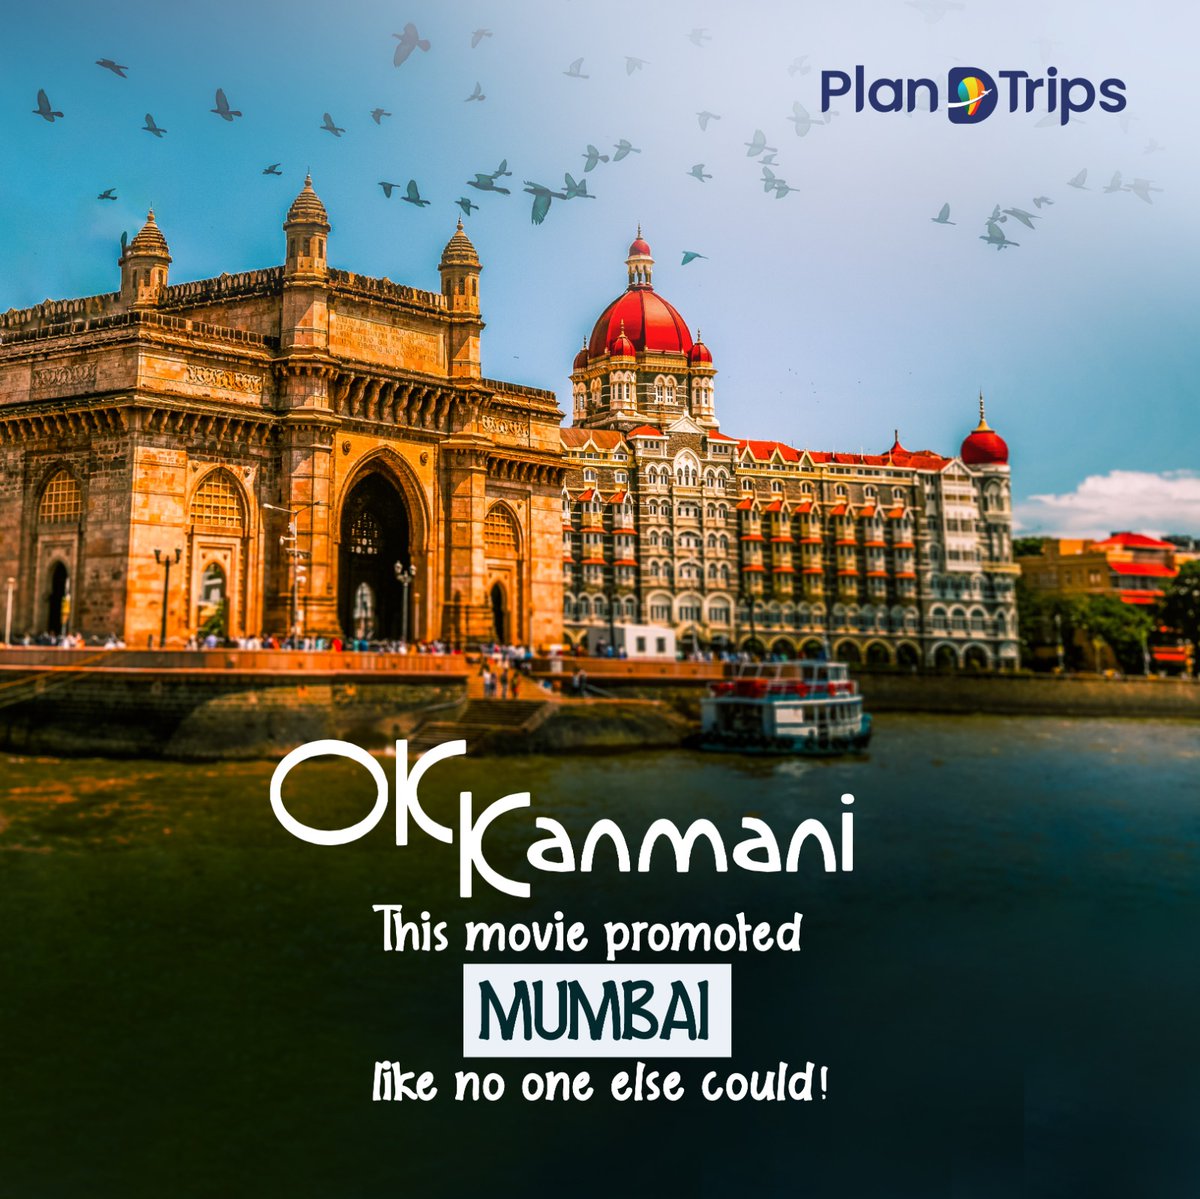 Add more in the comments! 
.
.
.
.
.
.

#plandtrips #keralatourism #trip #travel #tourism #bestplace #india #incredibleindia #tour #moments #life #Kerala #godsowncountry #manjummelboys #kumbalanginights #mumbai #manali #varanasi #kodaikanal #gavi